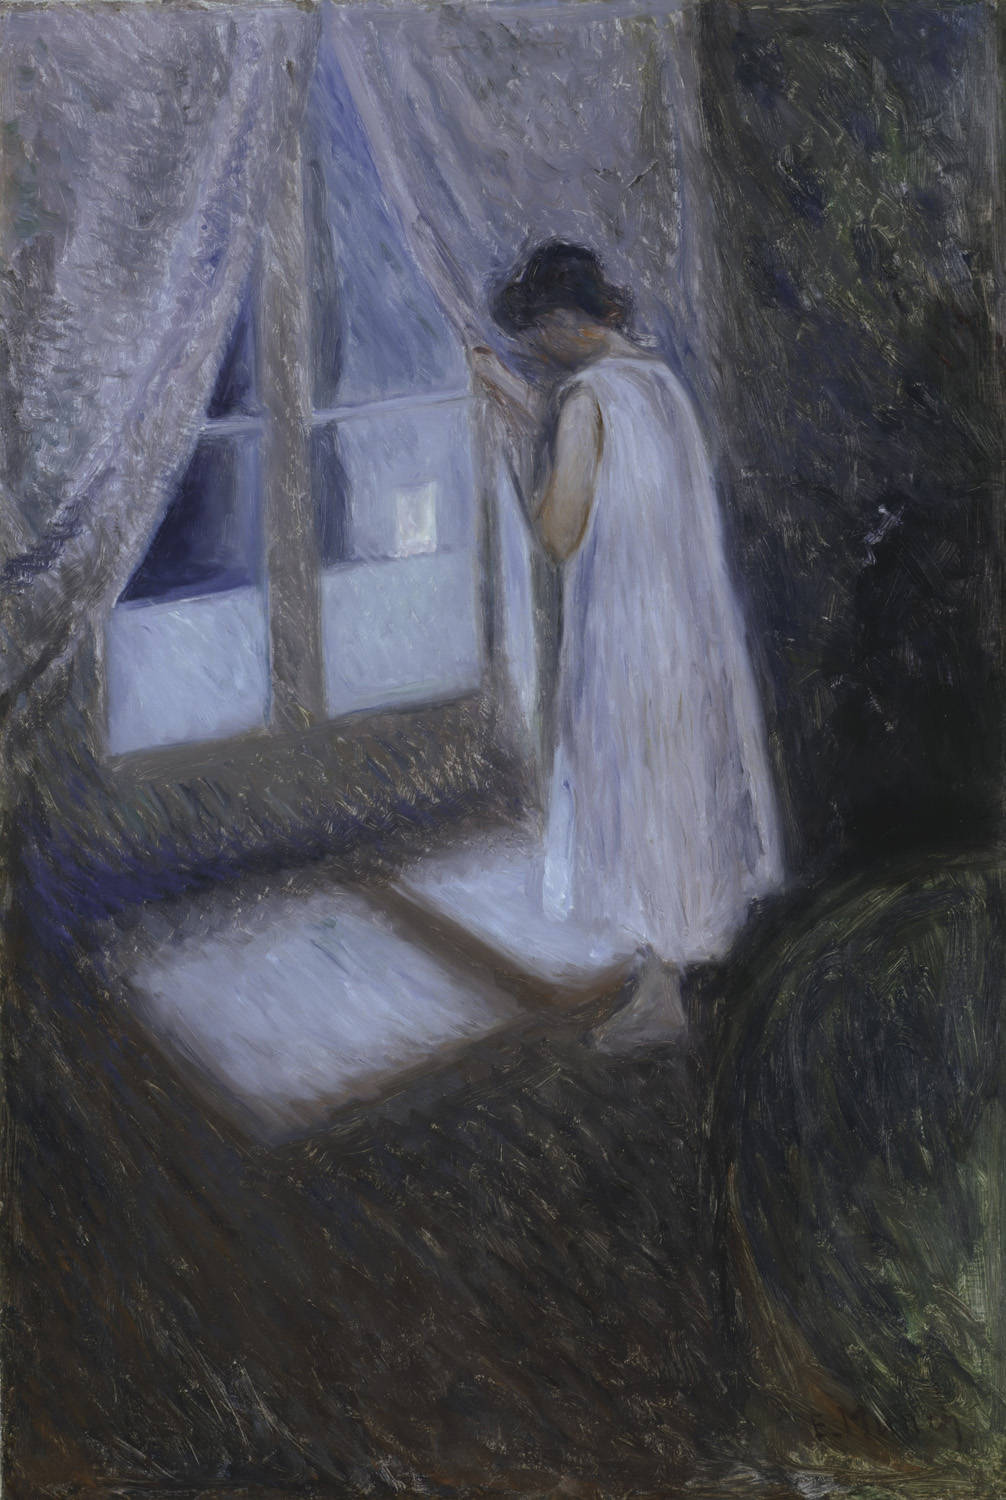 La ragazza alla finestra by Edvard Munch - 1893 - 96,5 x 65,4 cm Art Institute of Chicago